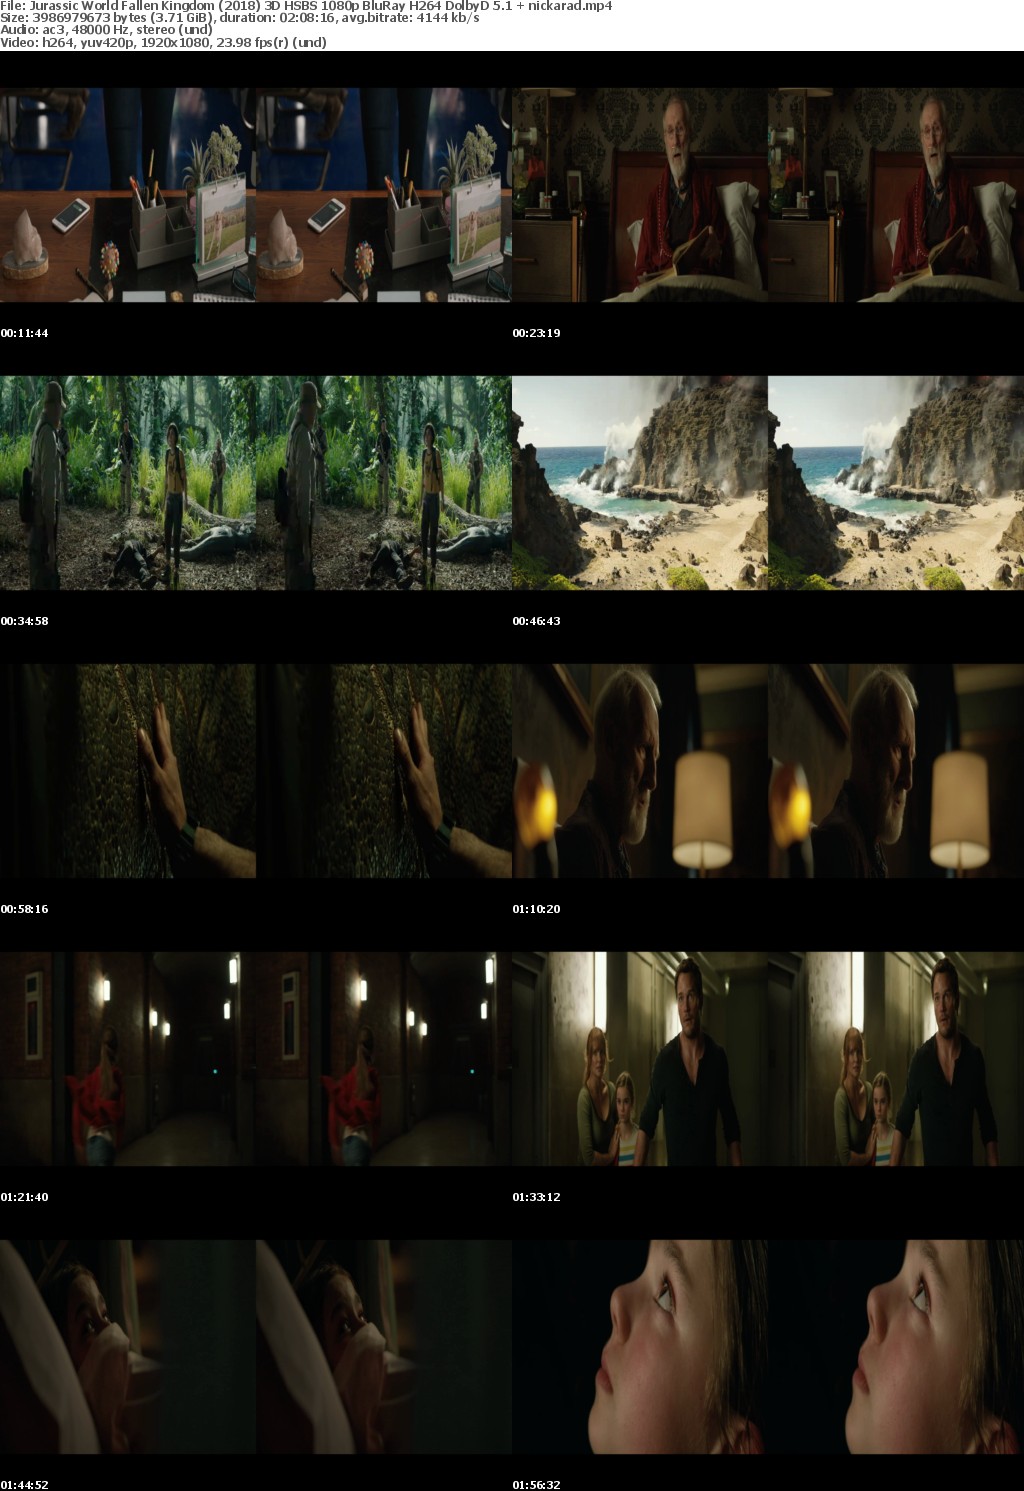 Jurassic World Fallen Kingdom (2018) 3D HSBS 1080p BluRay H264 DolbyD 5 1 nickarad